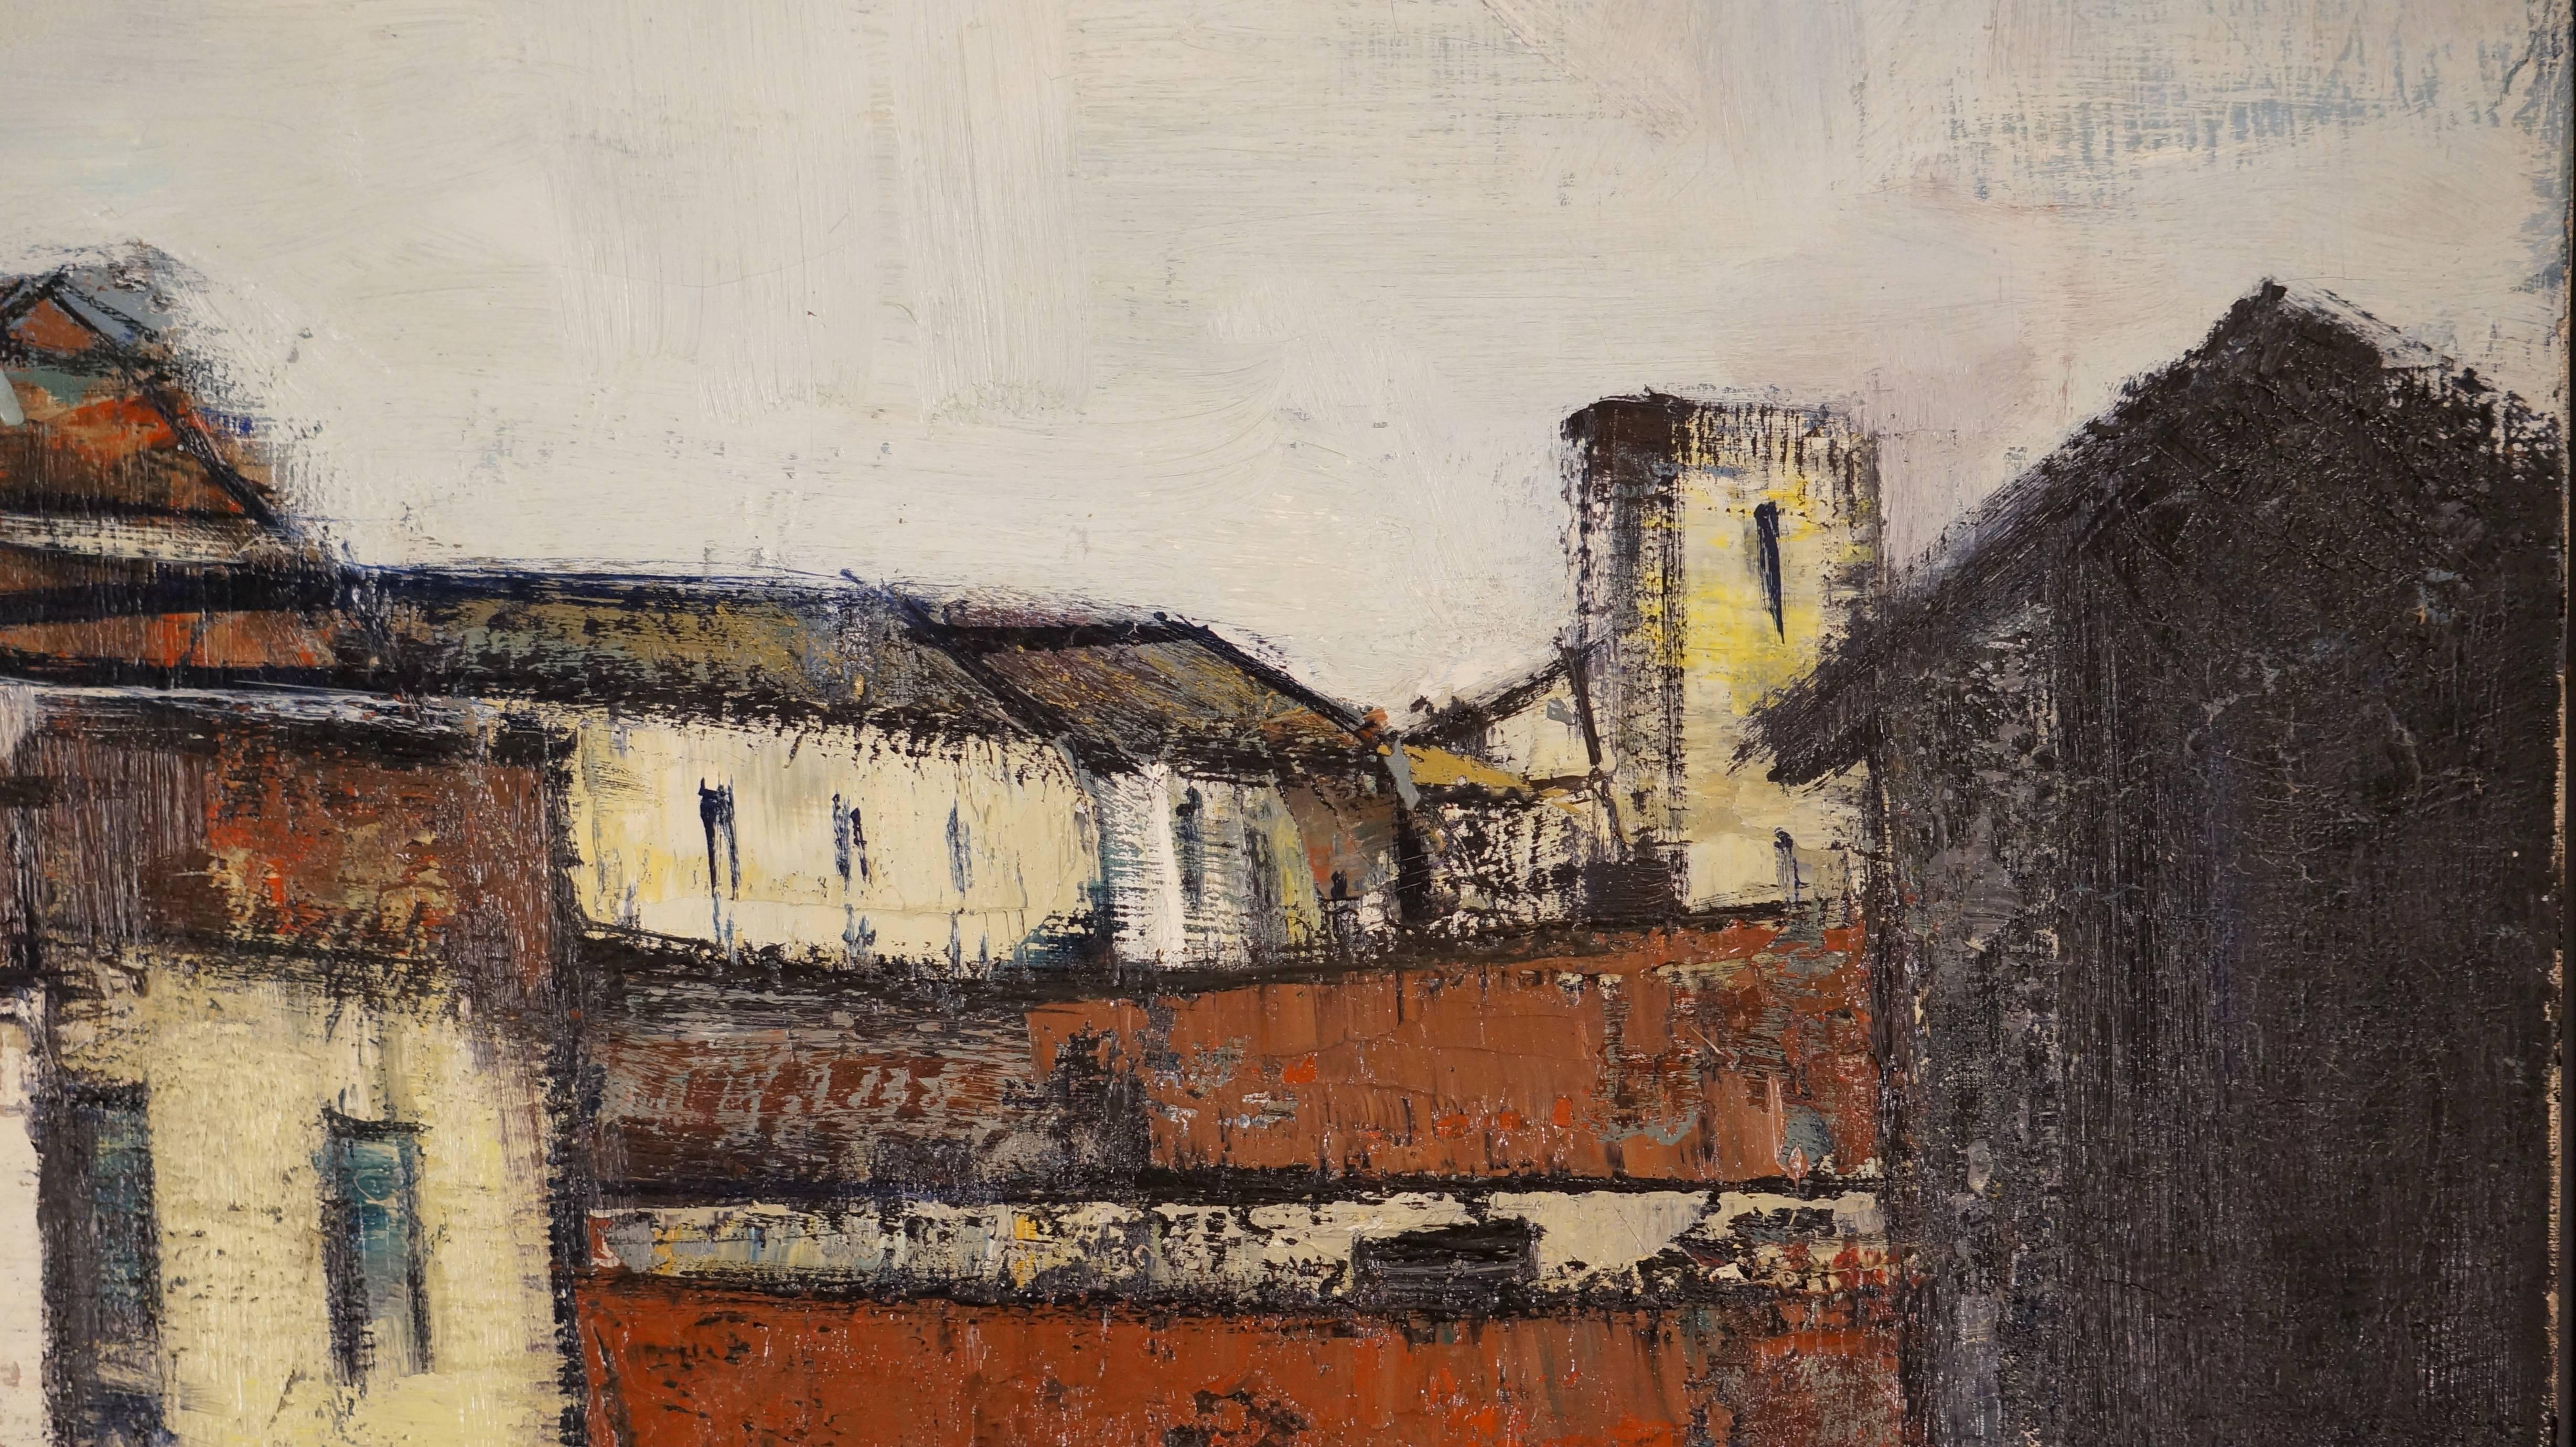 Small Town, 1950-60 - oil paint, 61x76 cm, framed - Modern Painting by Altmann Gérard